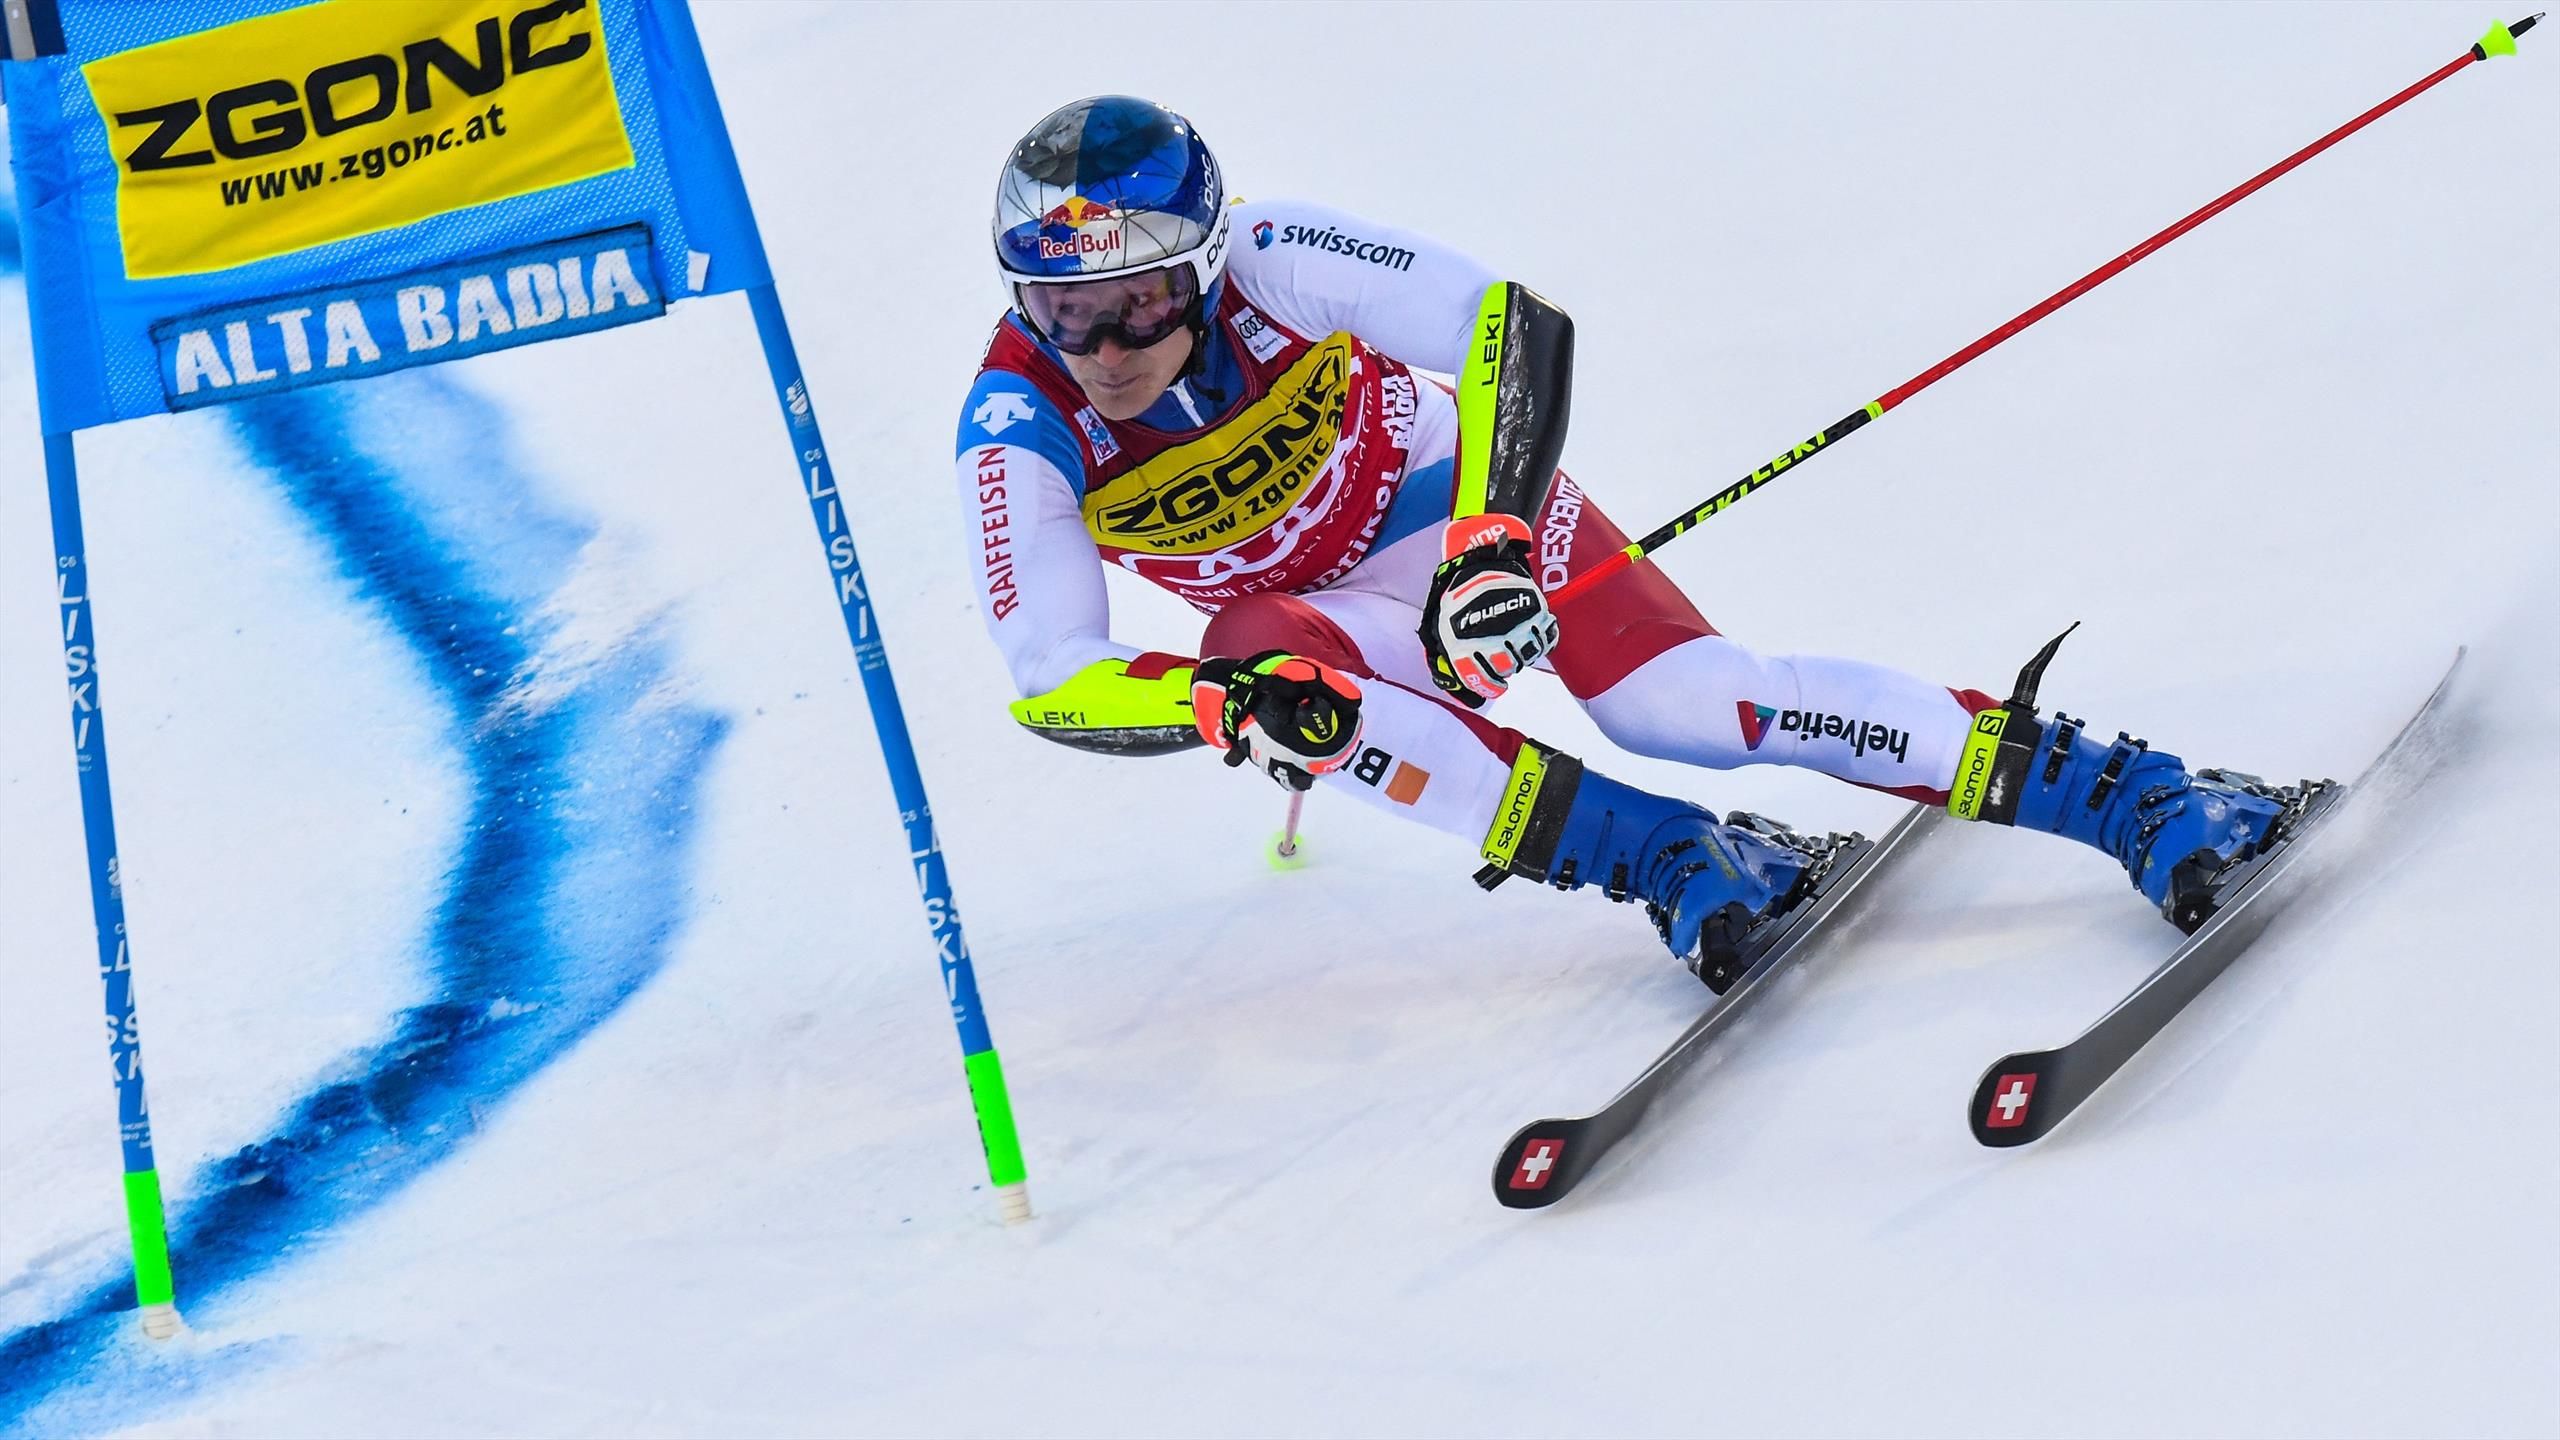 Ski alpin : Wengen reprend le super-G annulé à Bormio - Eurosport